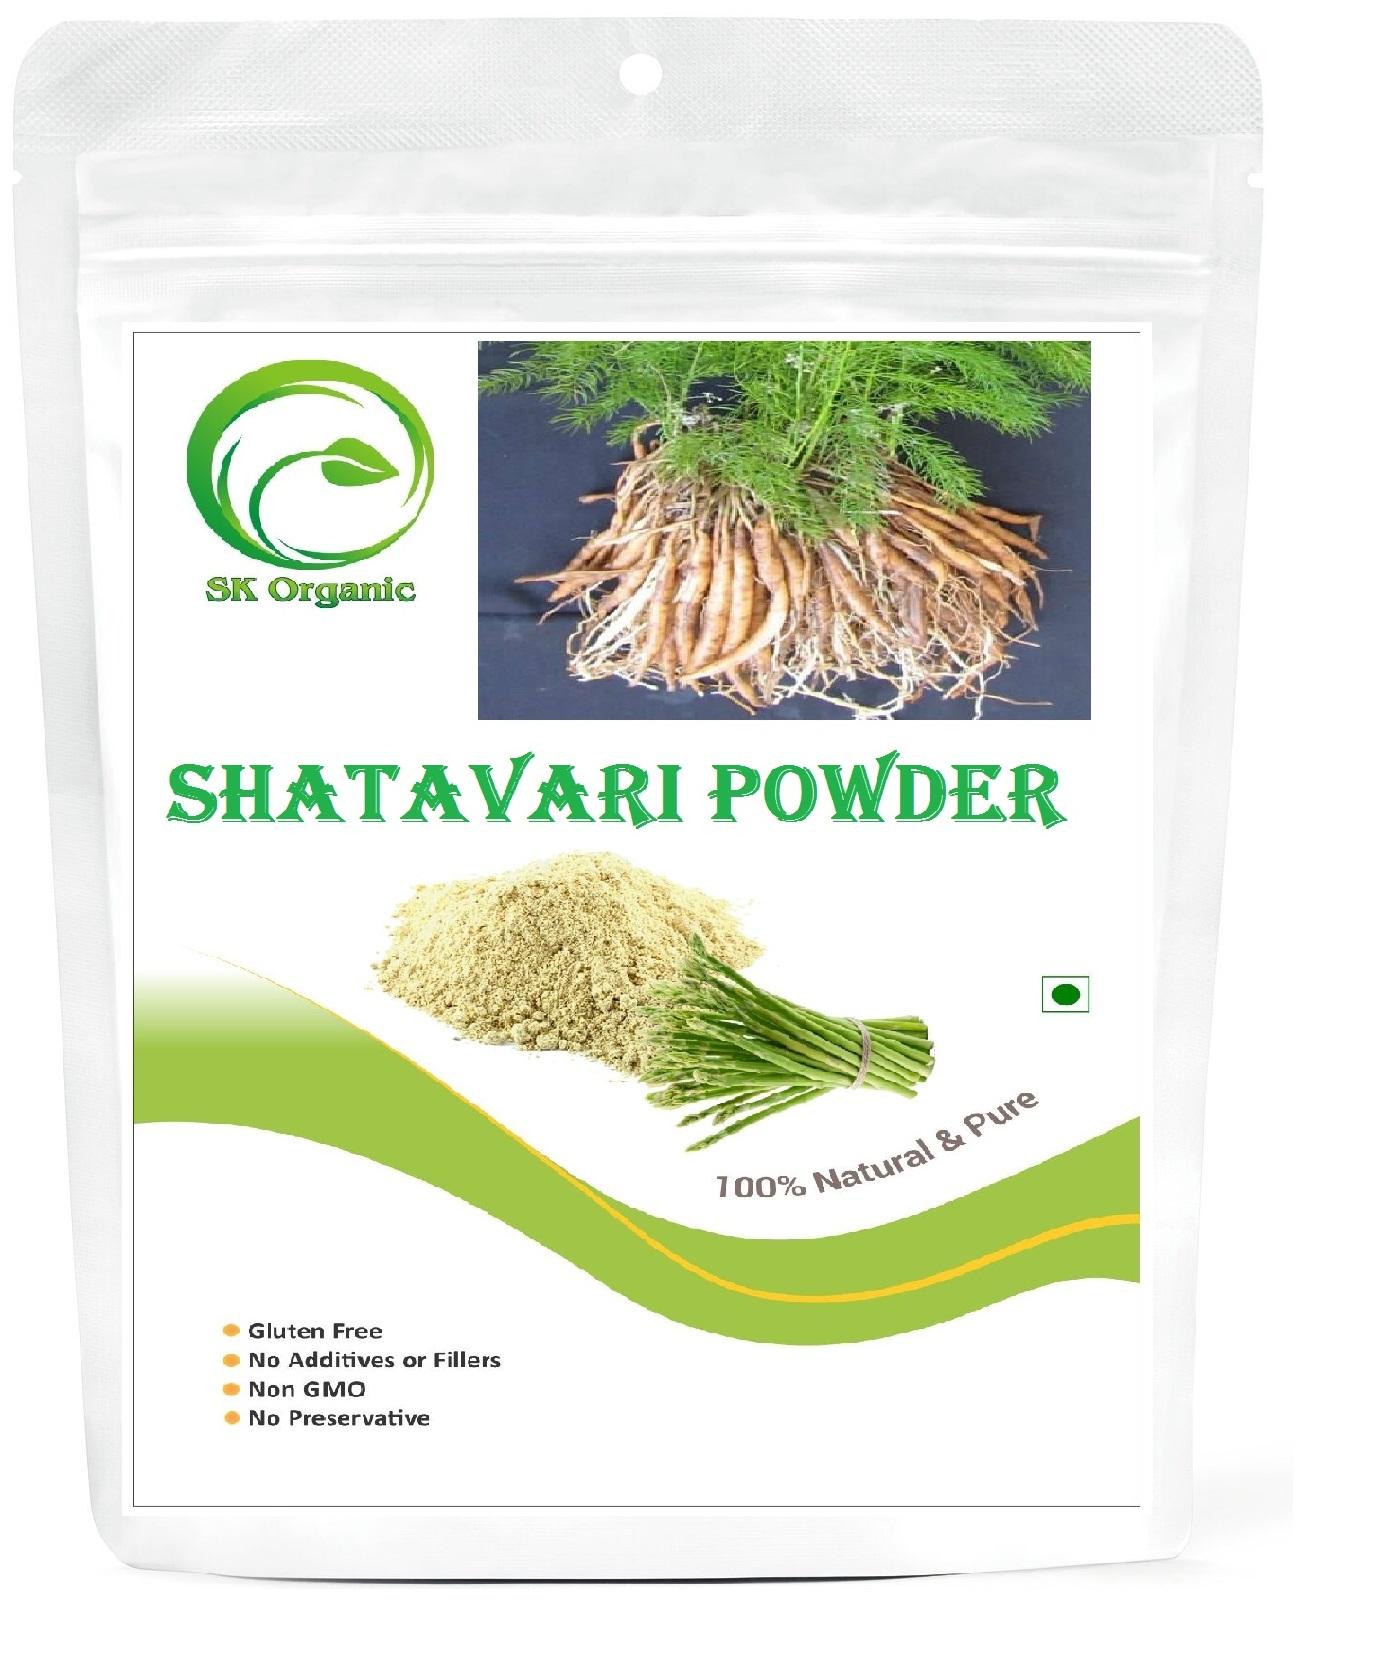 sk organic shatavari powder Churn Herb For health and wellness thumbnail